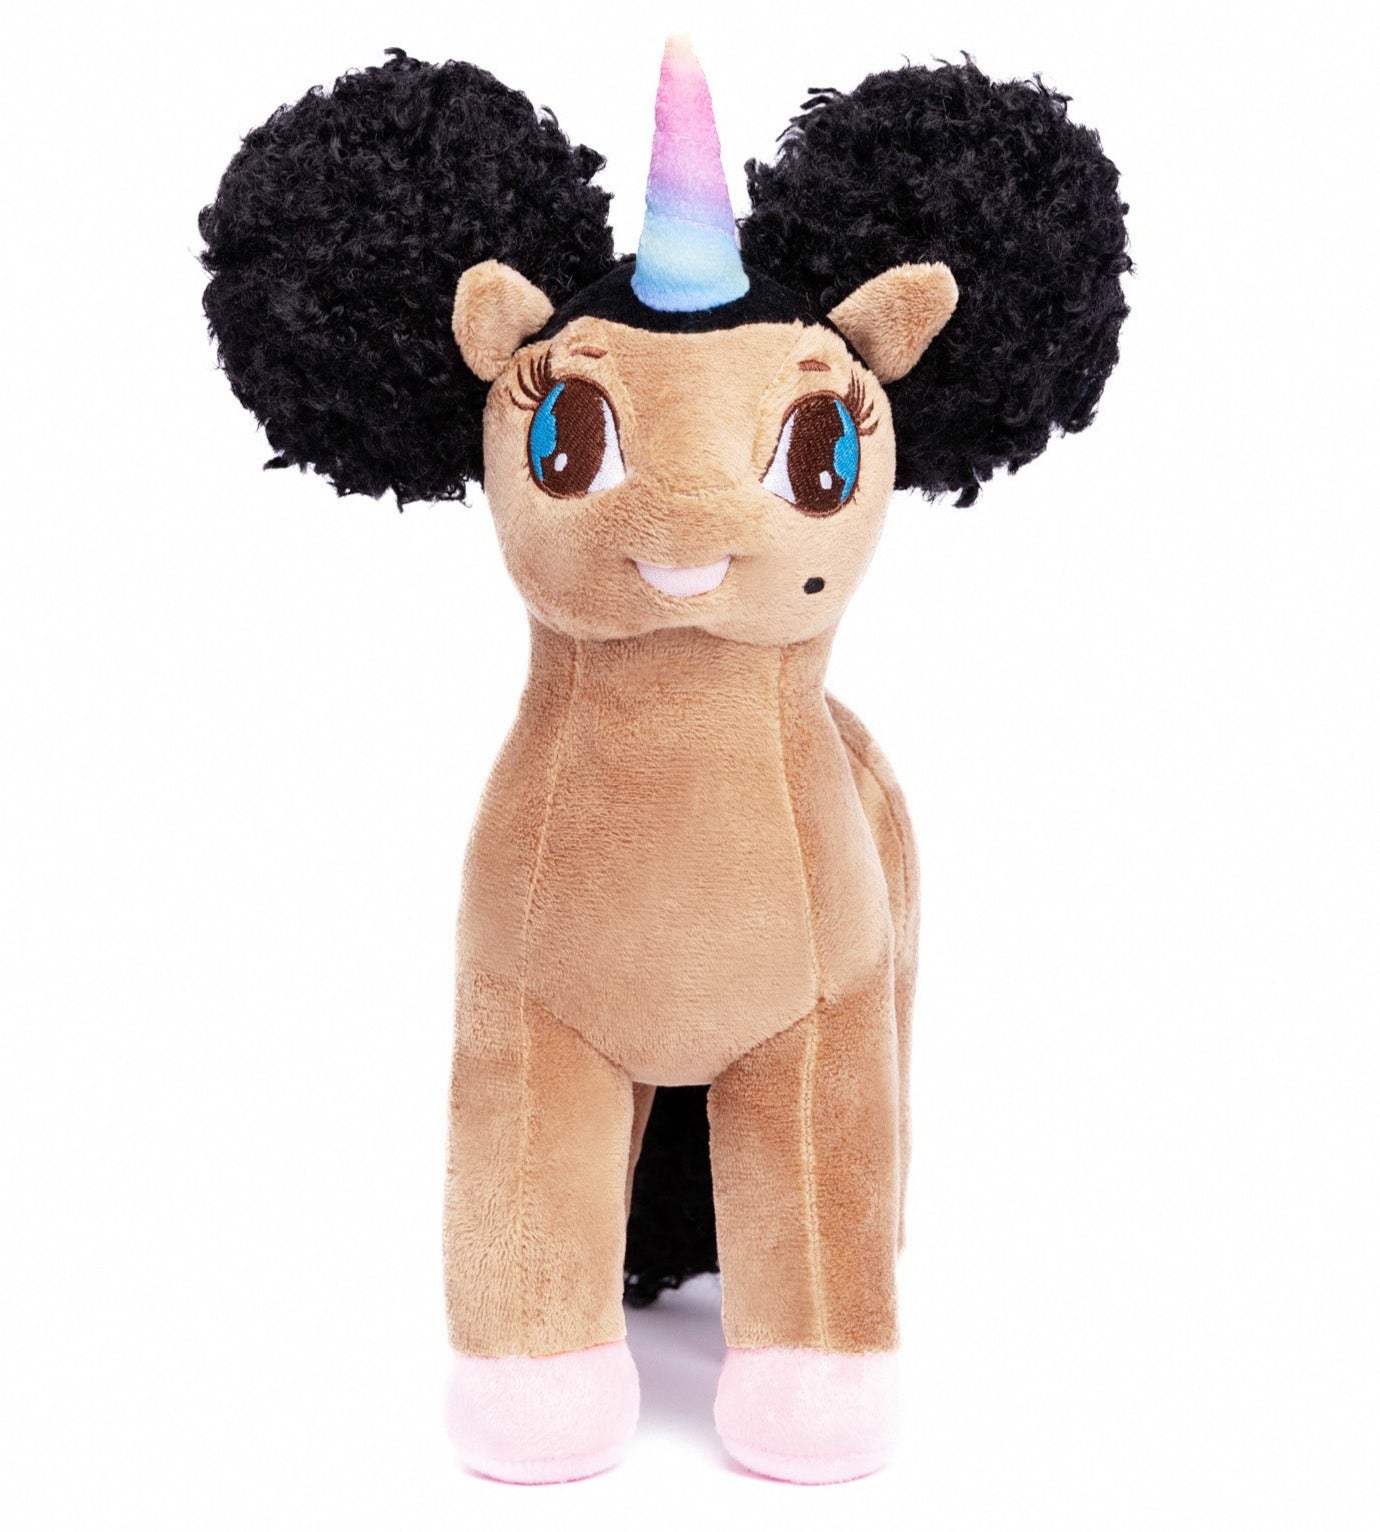 Mia Black Unicorn Plush Toy - 12 inch